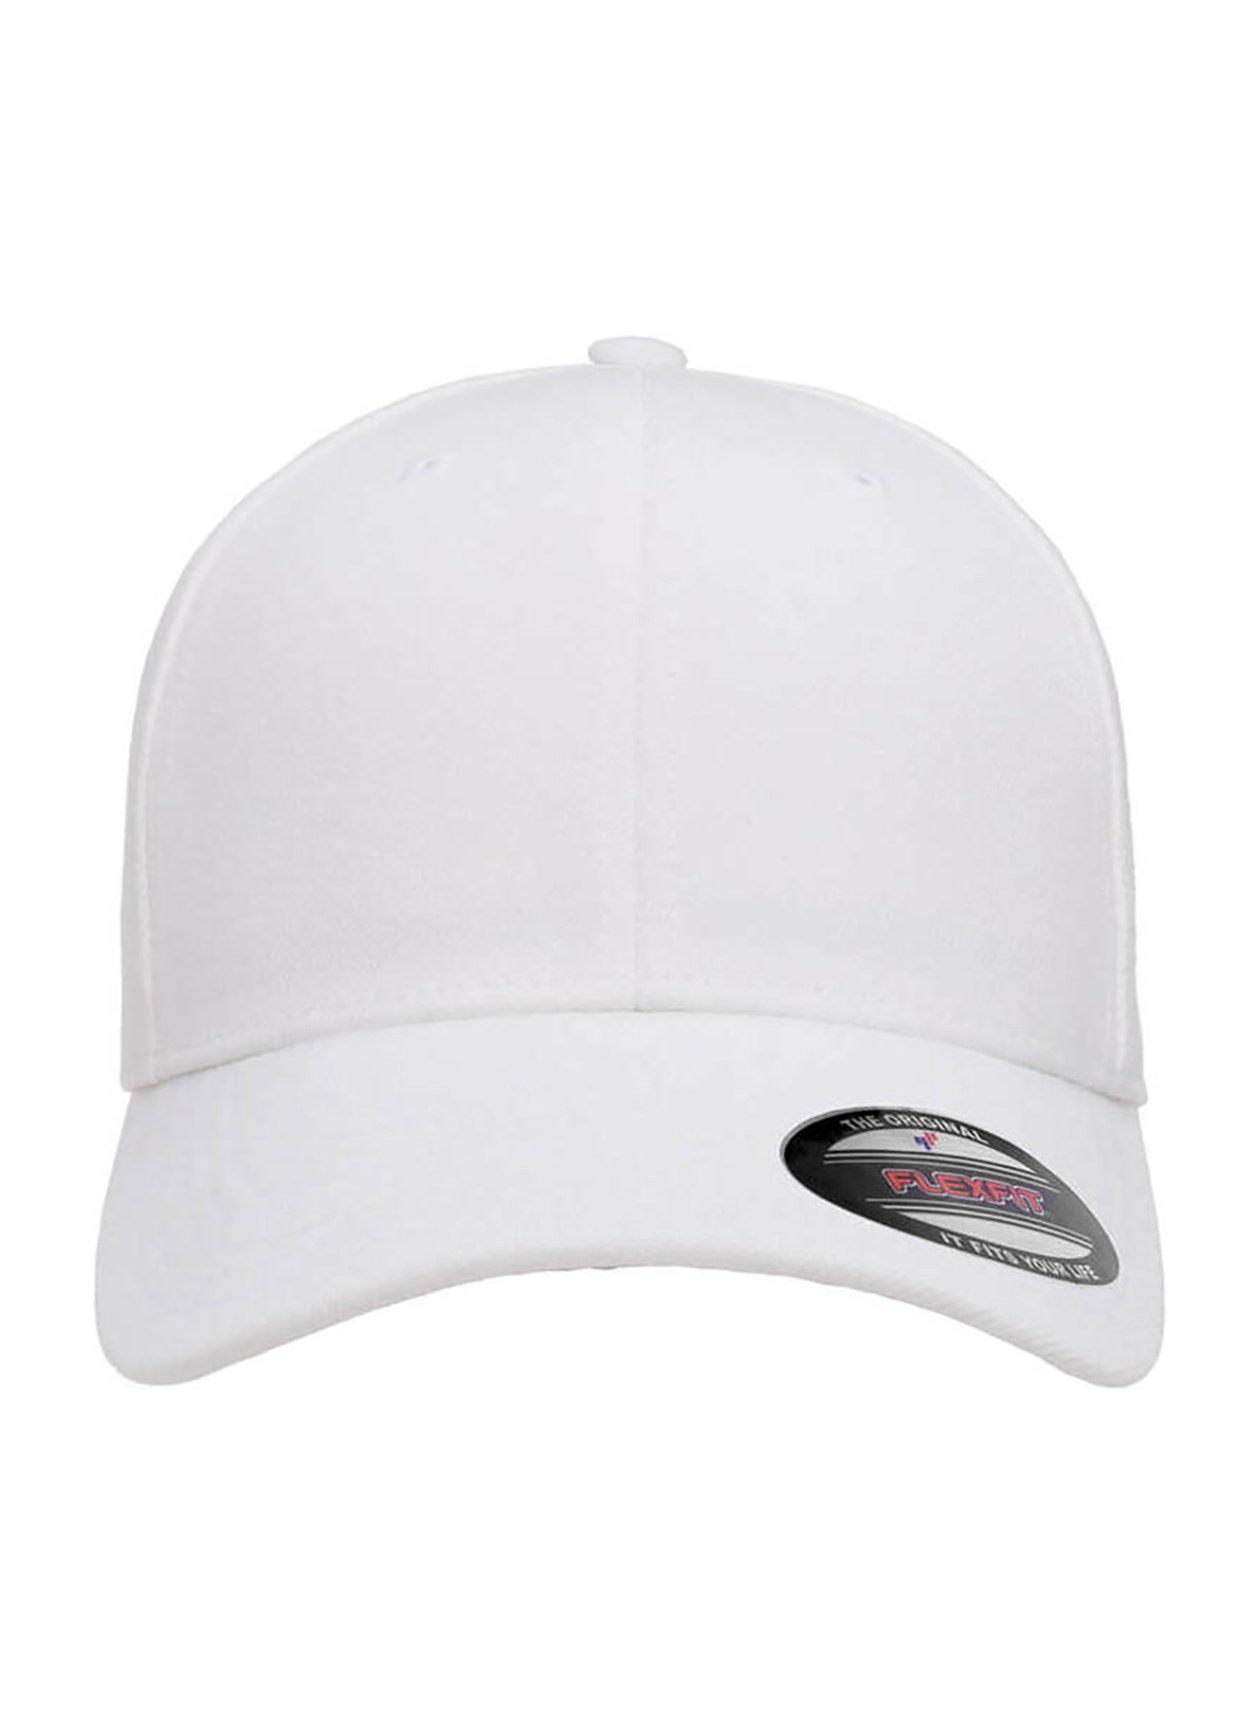 Flexfit White Wool Blend Hat